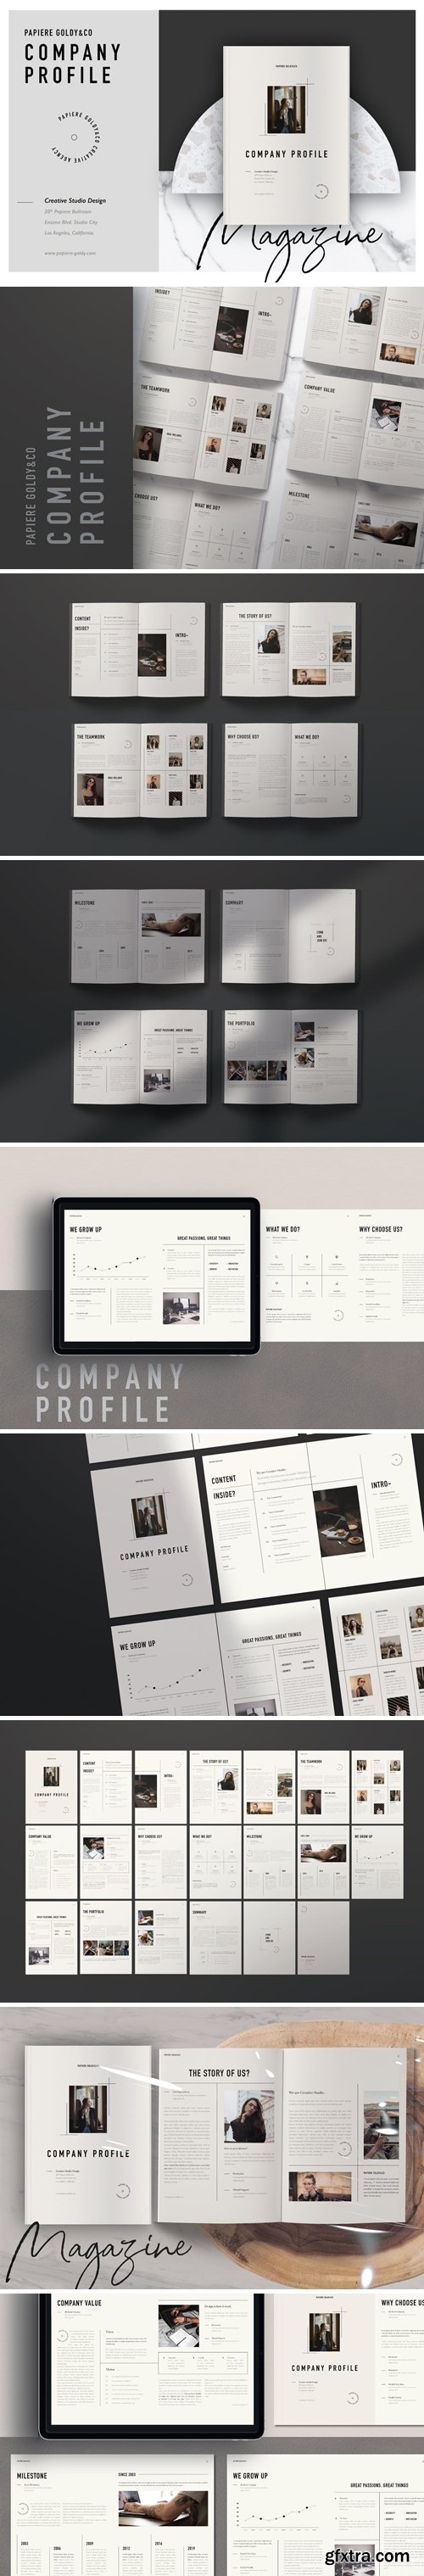 Papiere Goldy & Co Company Profile